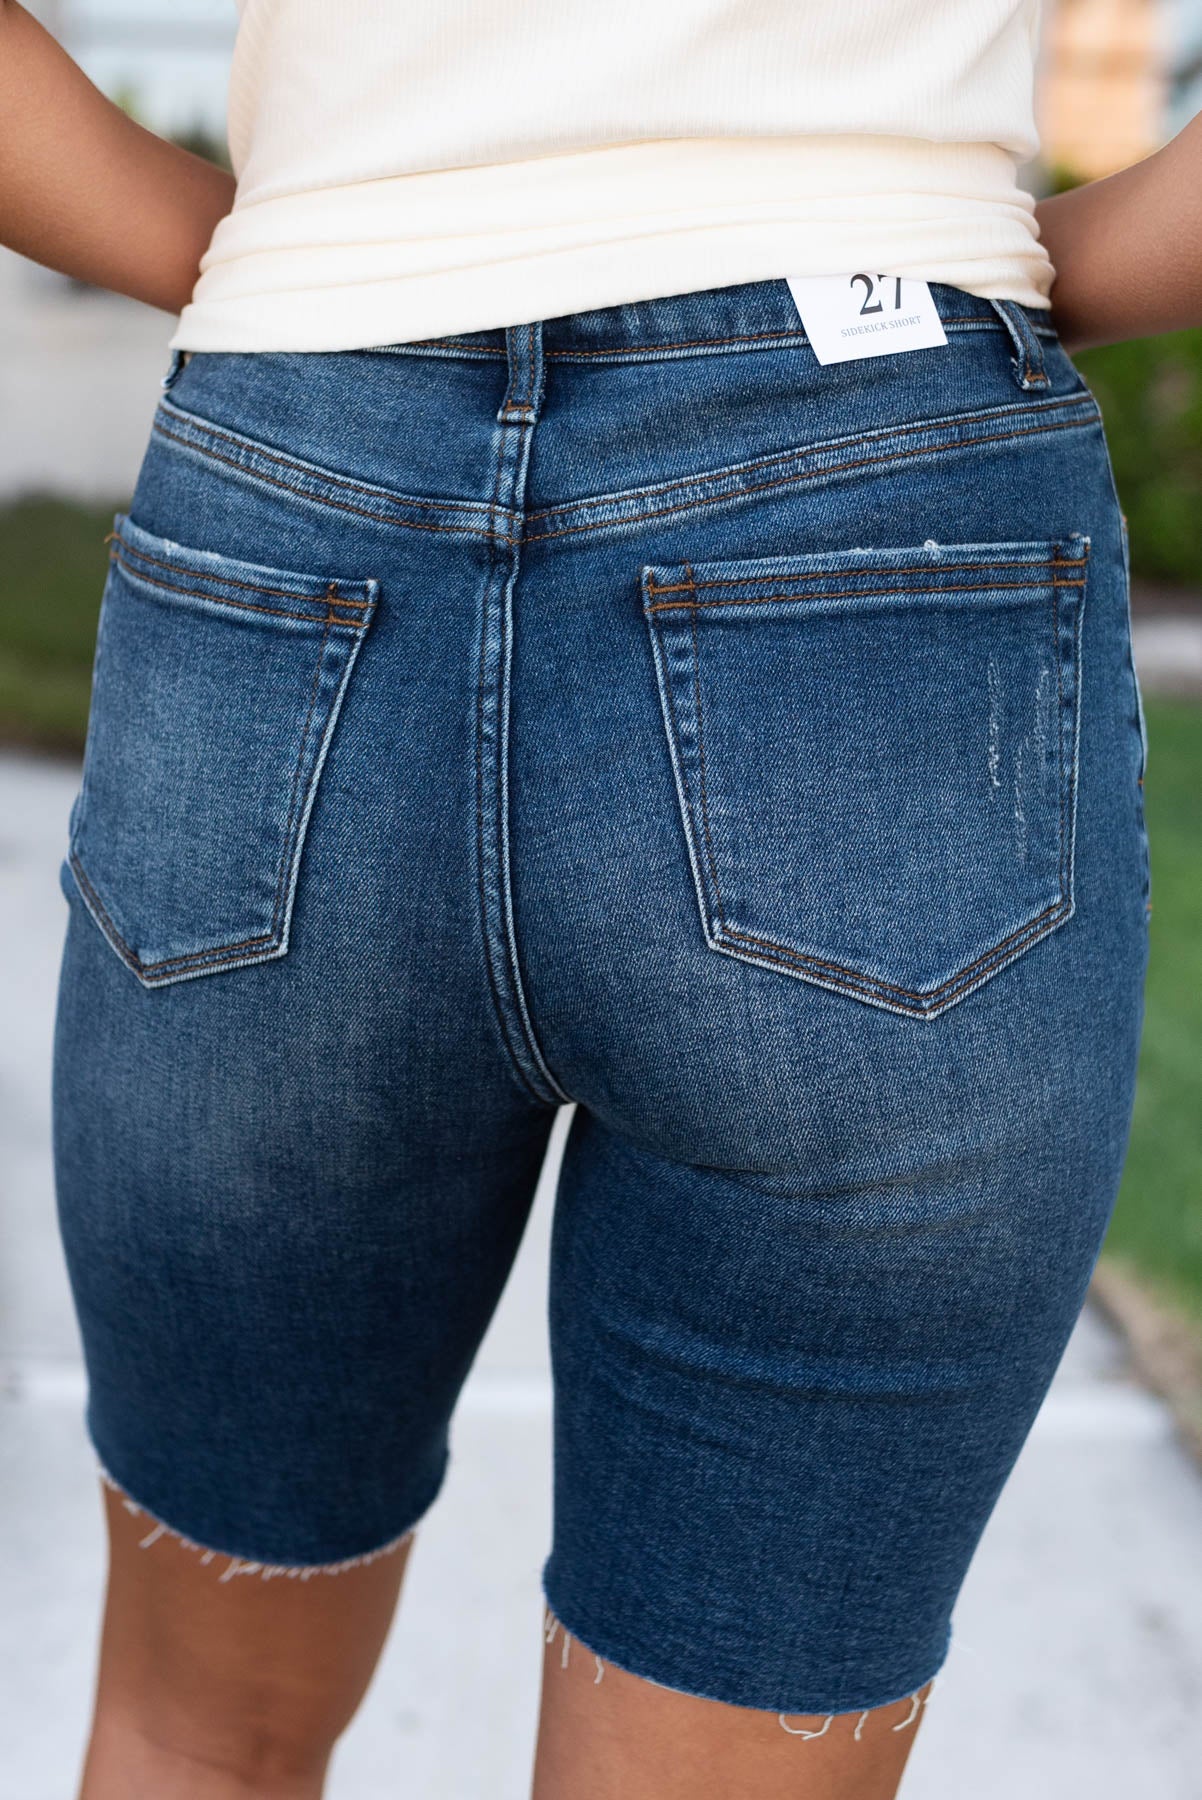 back view of the indigo shorts